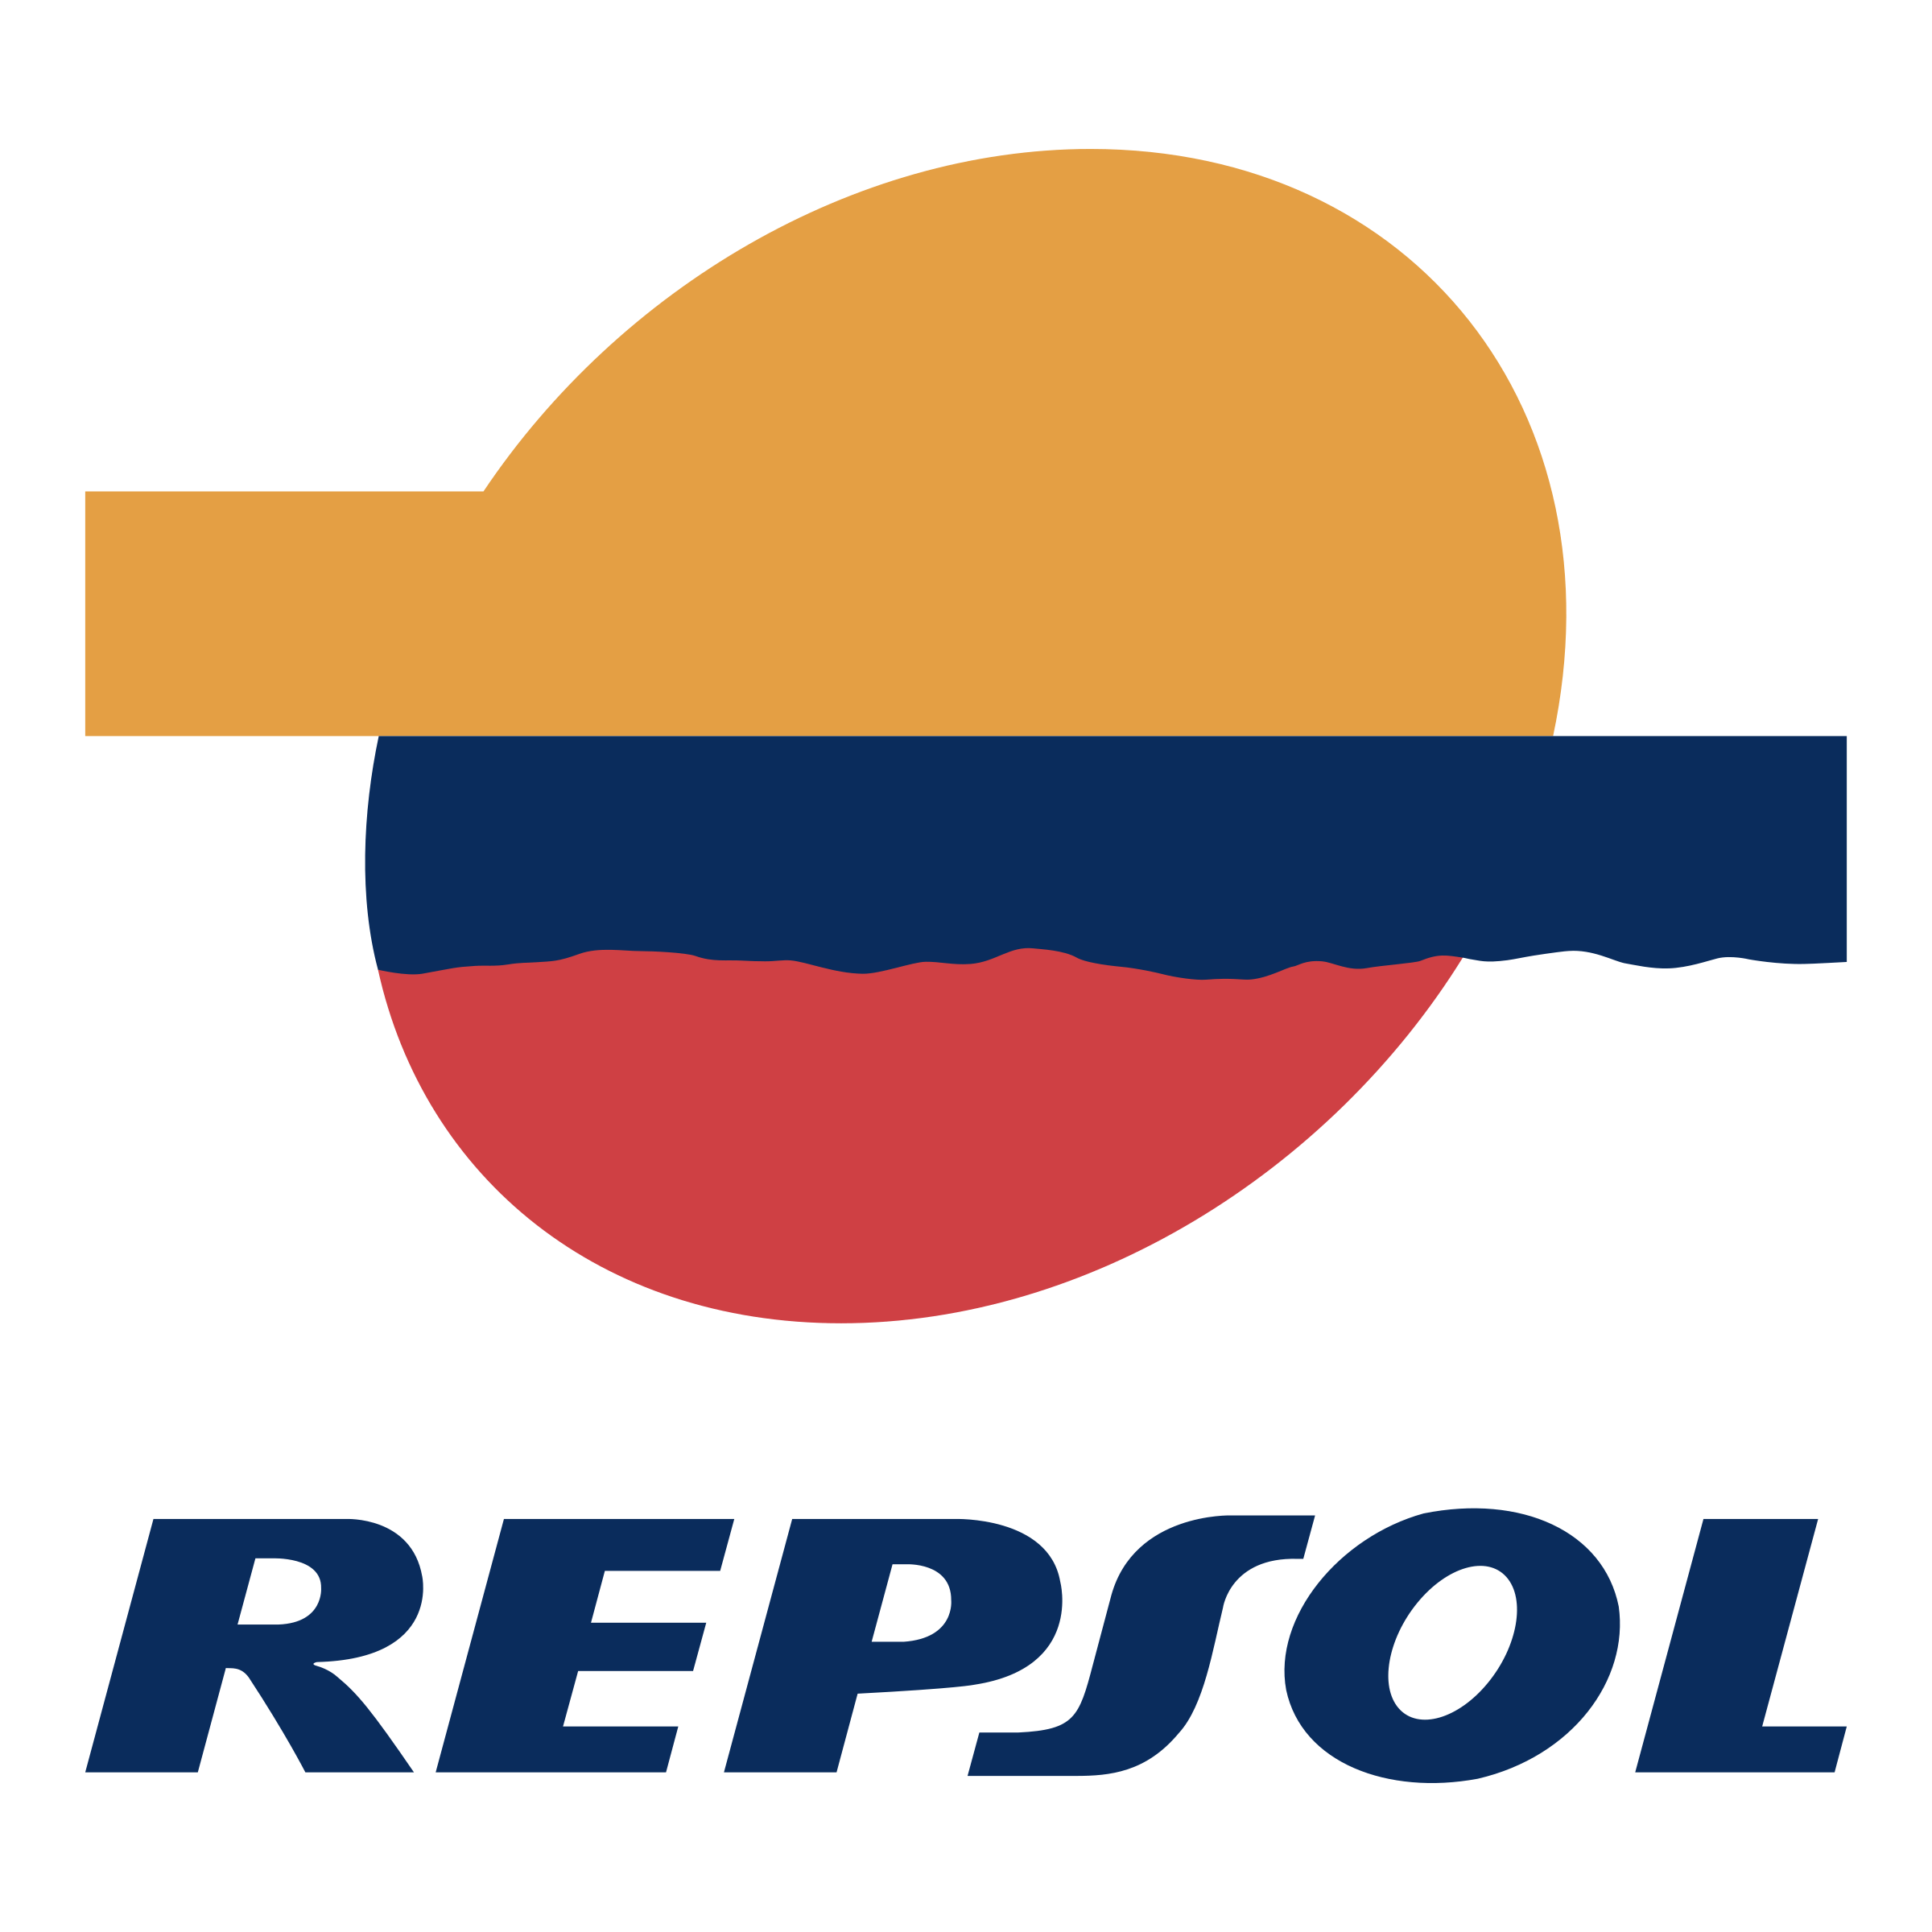 Repsol Logo - Repsol Logo PNG Transparent & SVG Vector - Freebie Supply